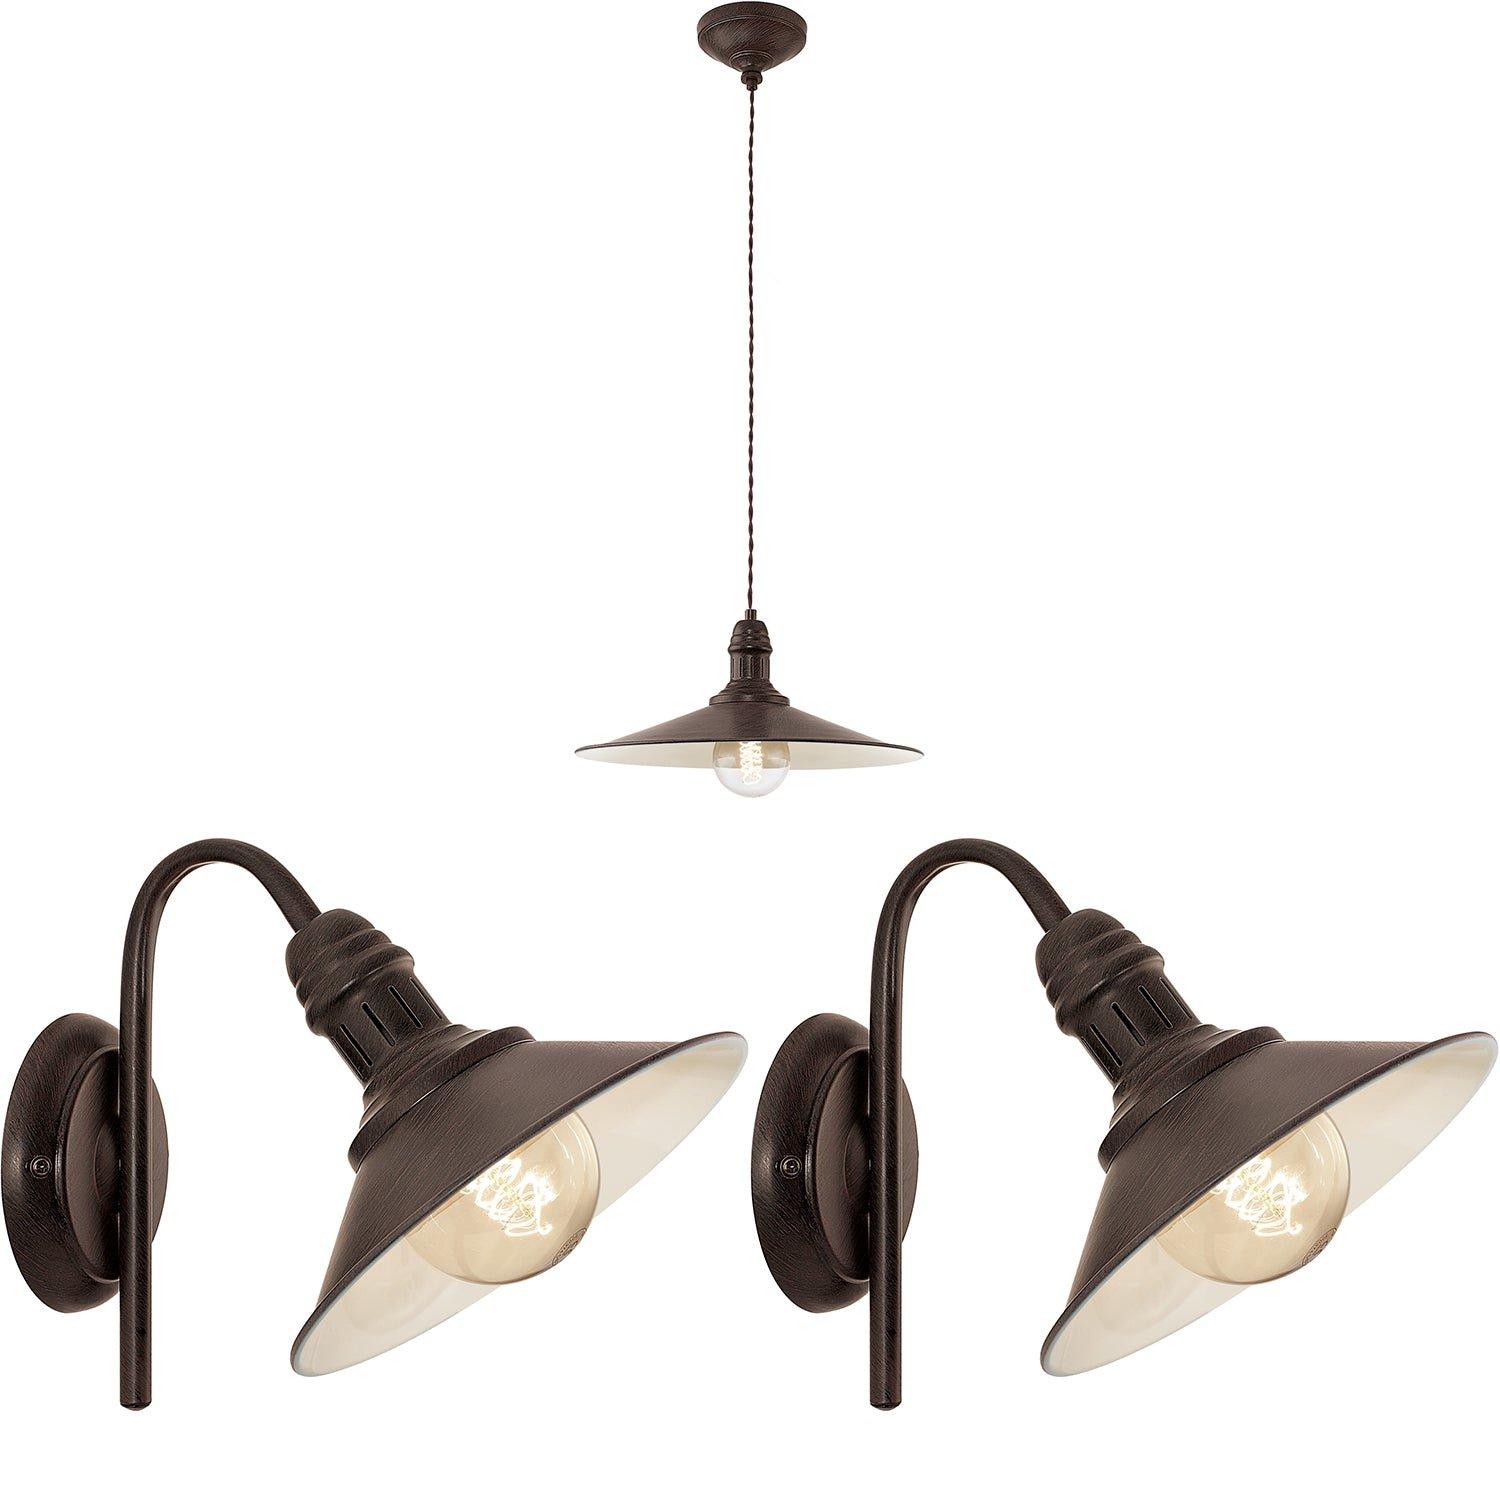 Ceiling Pendant Light & 2x Matching Wall Lights Antique Rust Effect Lamp Shade